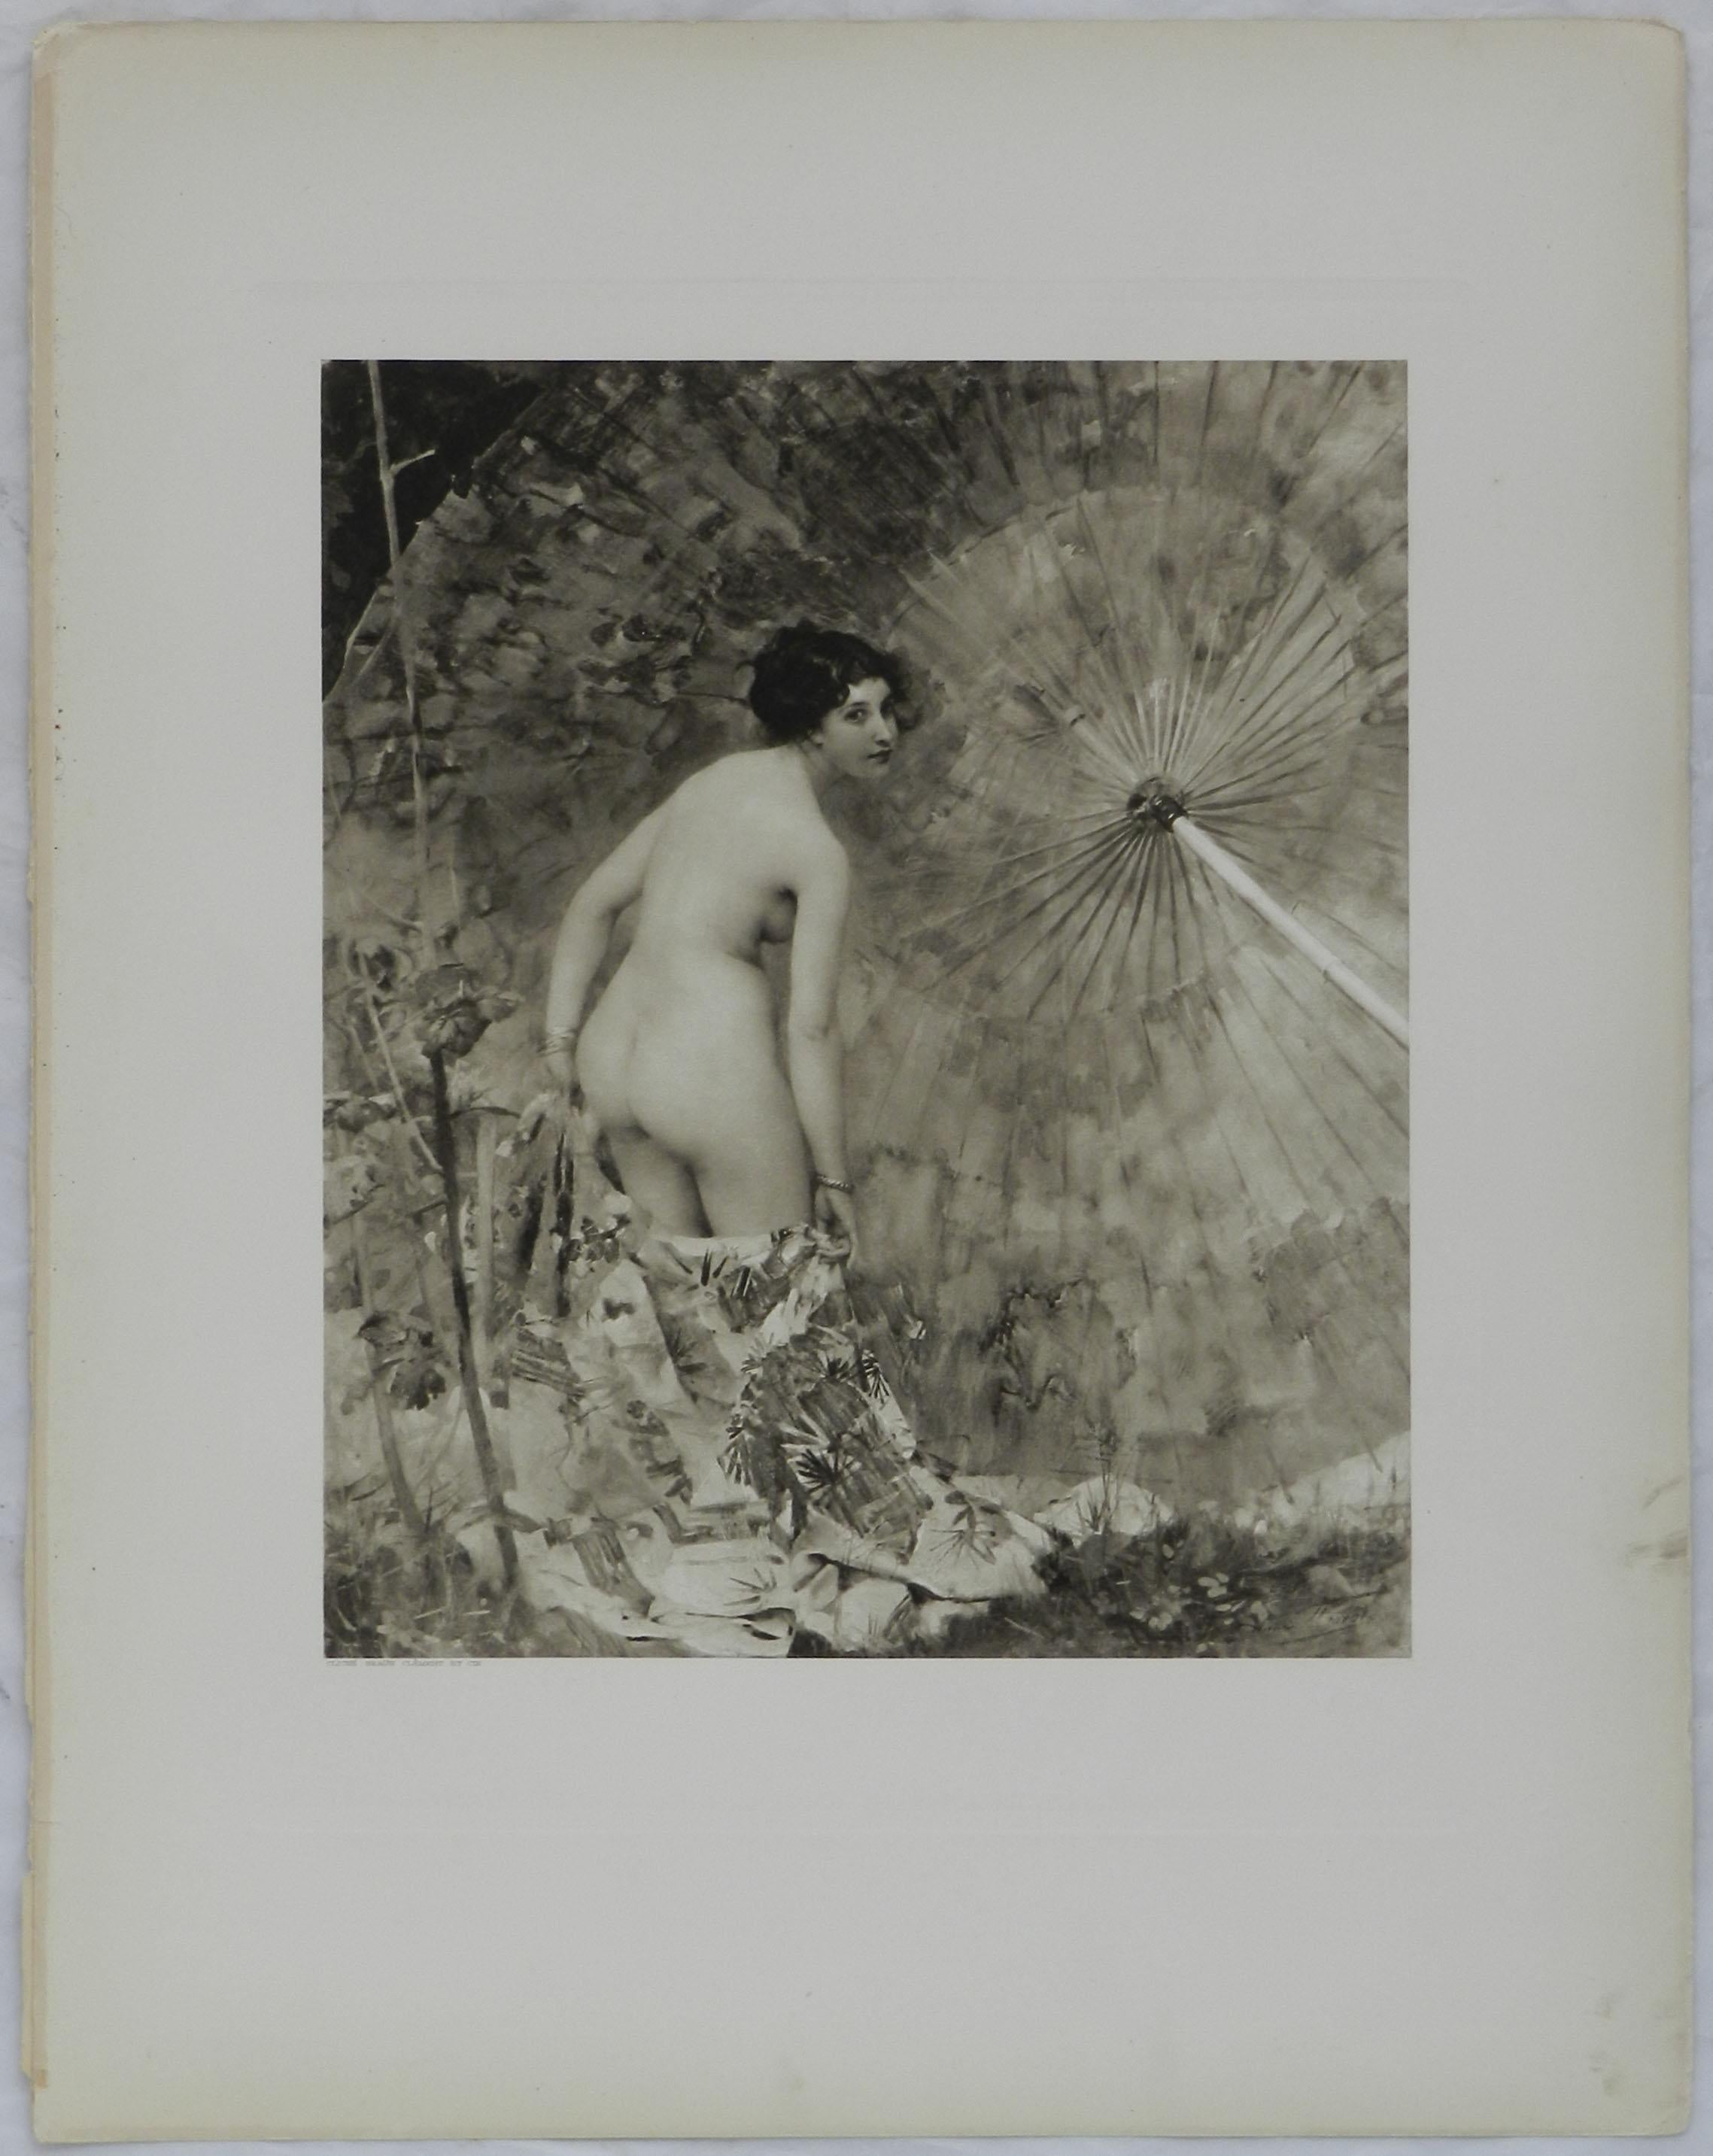 Etude de Femme Bain Nude Signed Aime Morot Engraving c1906 no 309 of 500 9